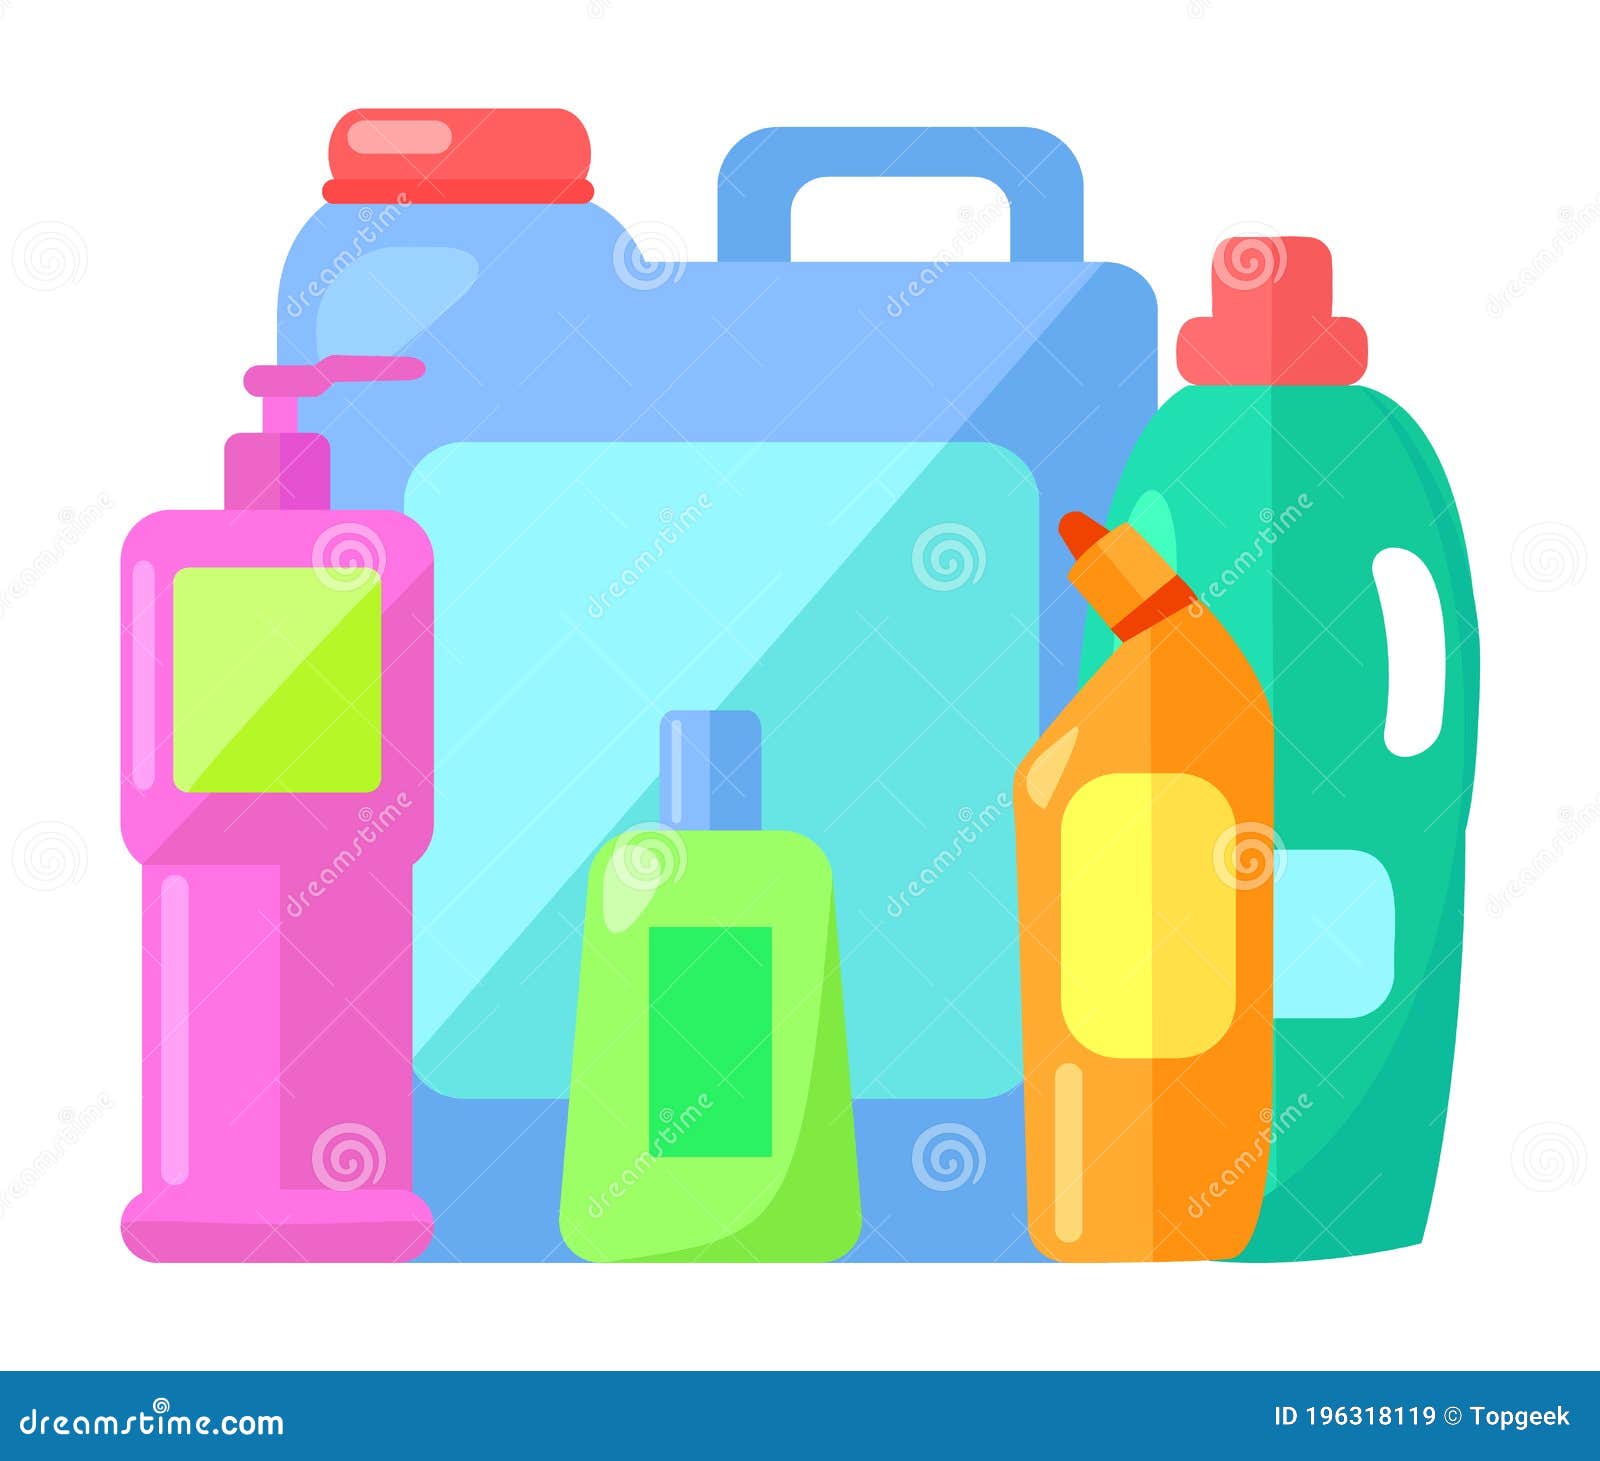 https://thumbs.dreamstime.com/z/set-plastic-containers-storing-liquid-household-chemicals-bottles-large-blue-canister-purple-bottle-dispenser-196318119.jpg